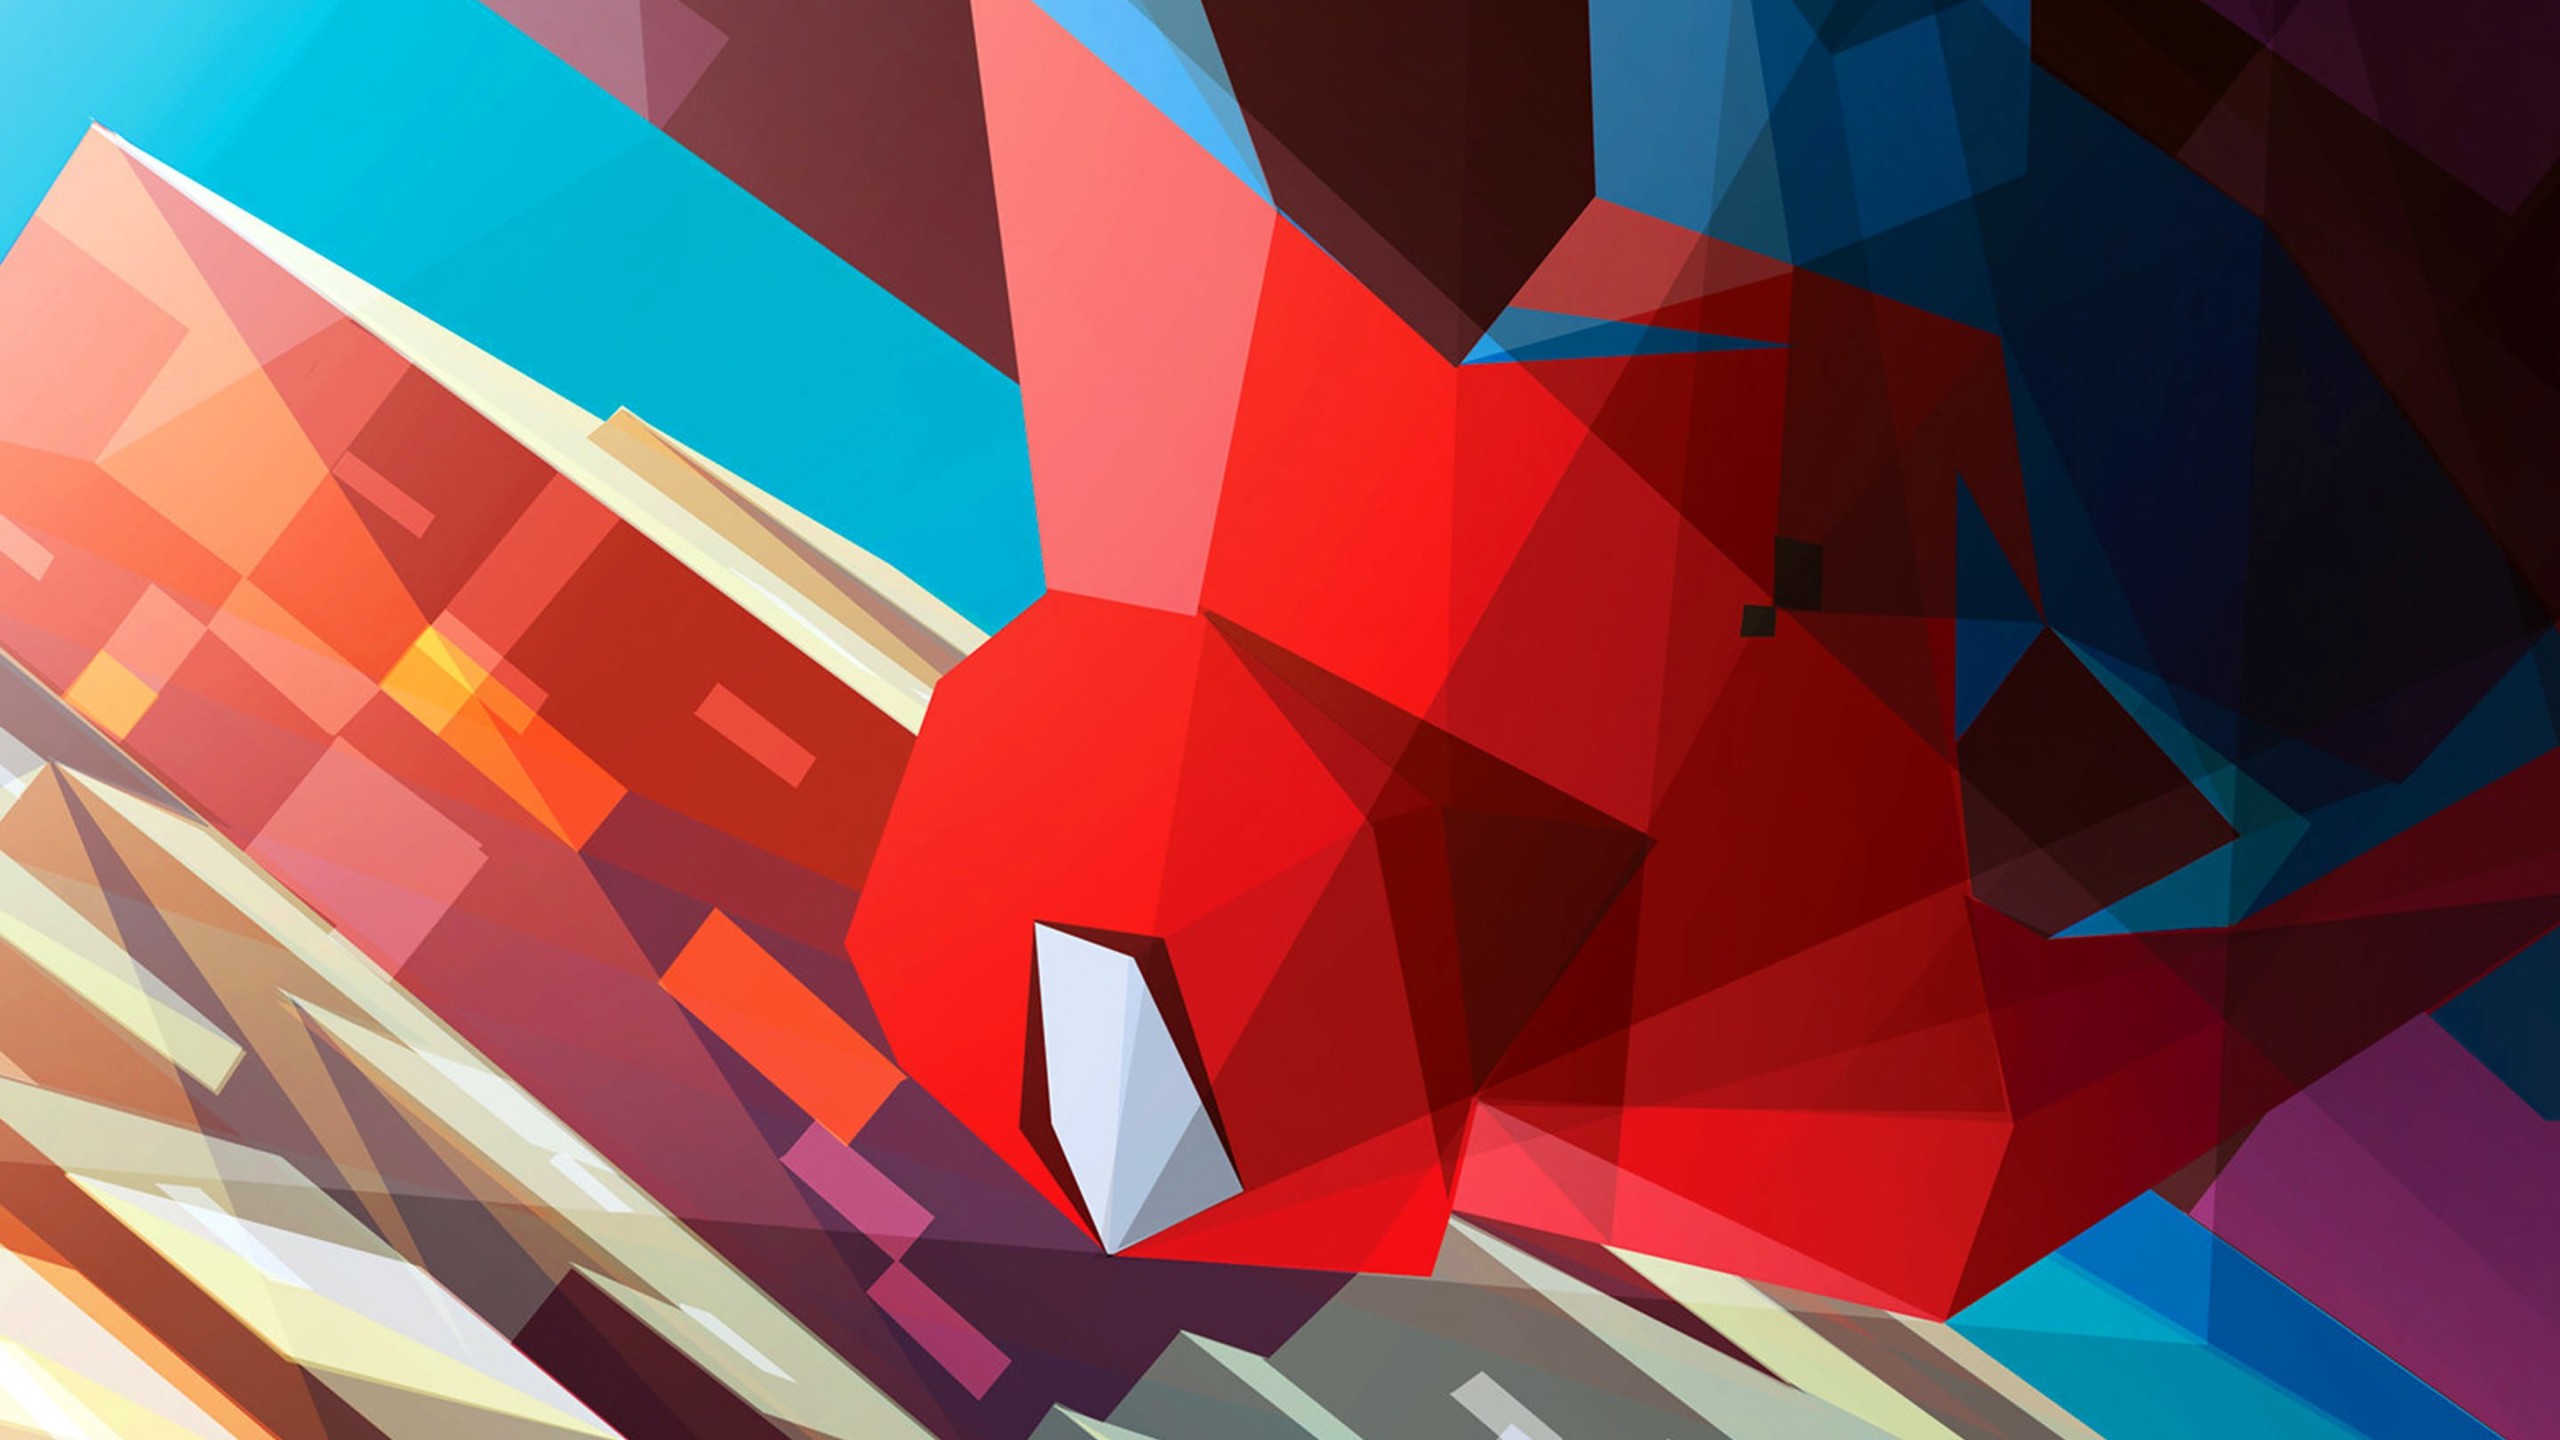 Spiderman Low Poly Illustration Wallpaper for Desktop 2560x1440